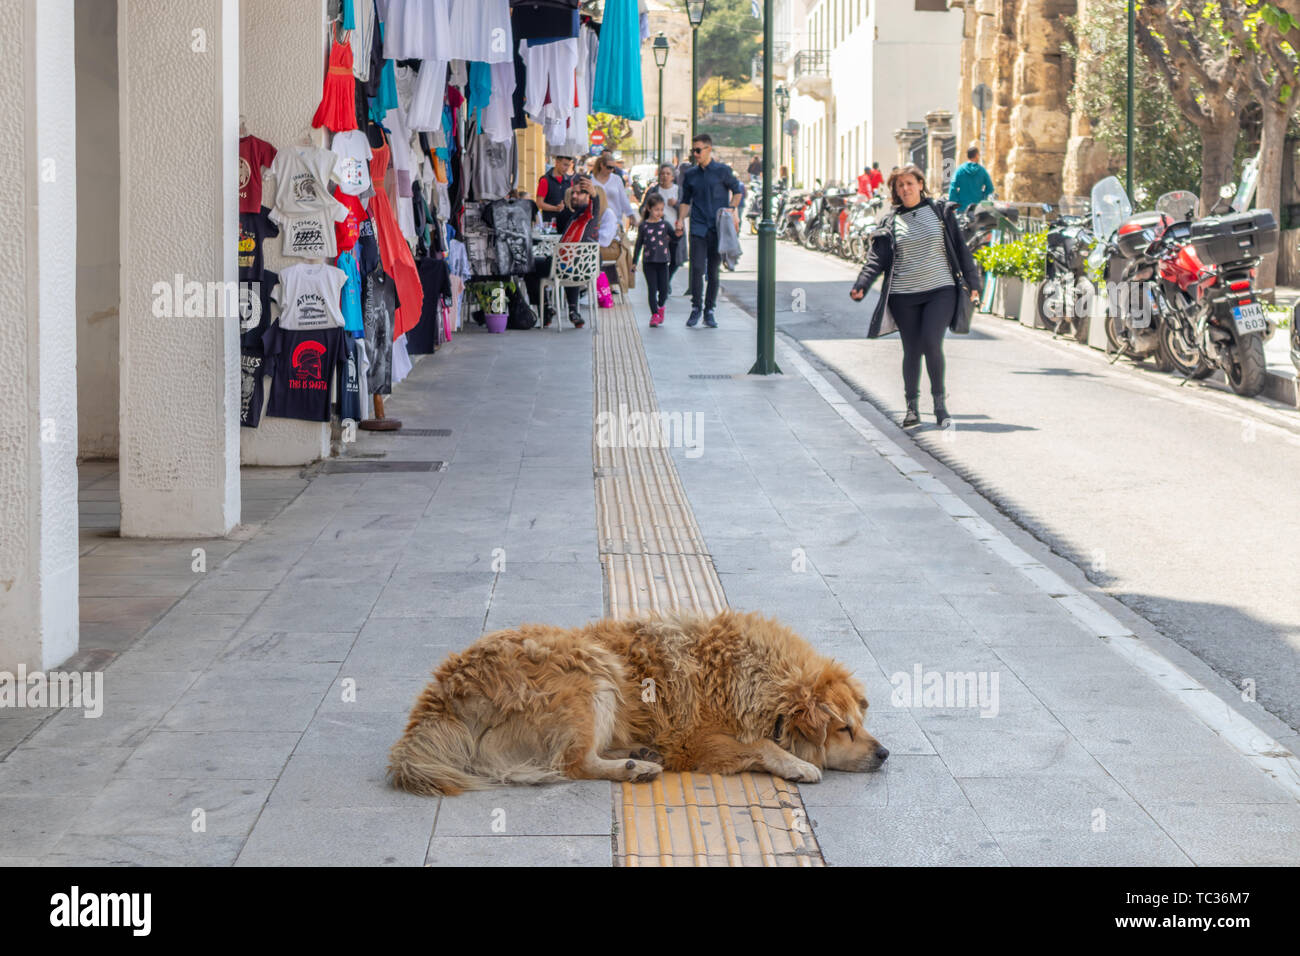 April 28, 2019. Athens, Greece. Sleeping dog. Brown abandoned animal sleeps in the middle of sidewalk. Market, people walking Stock Photo